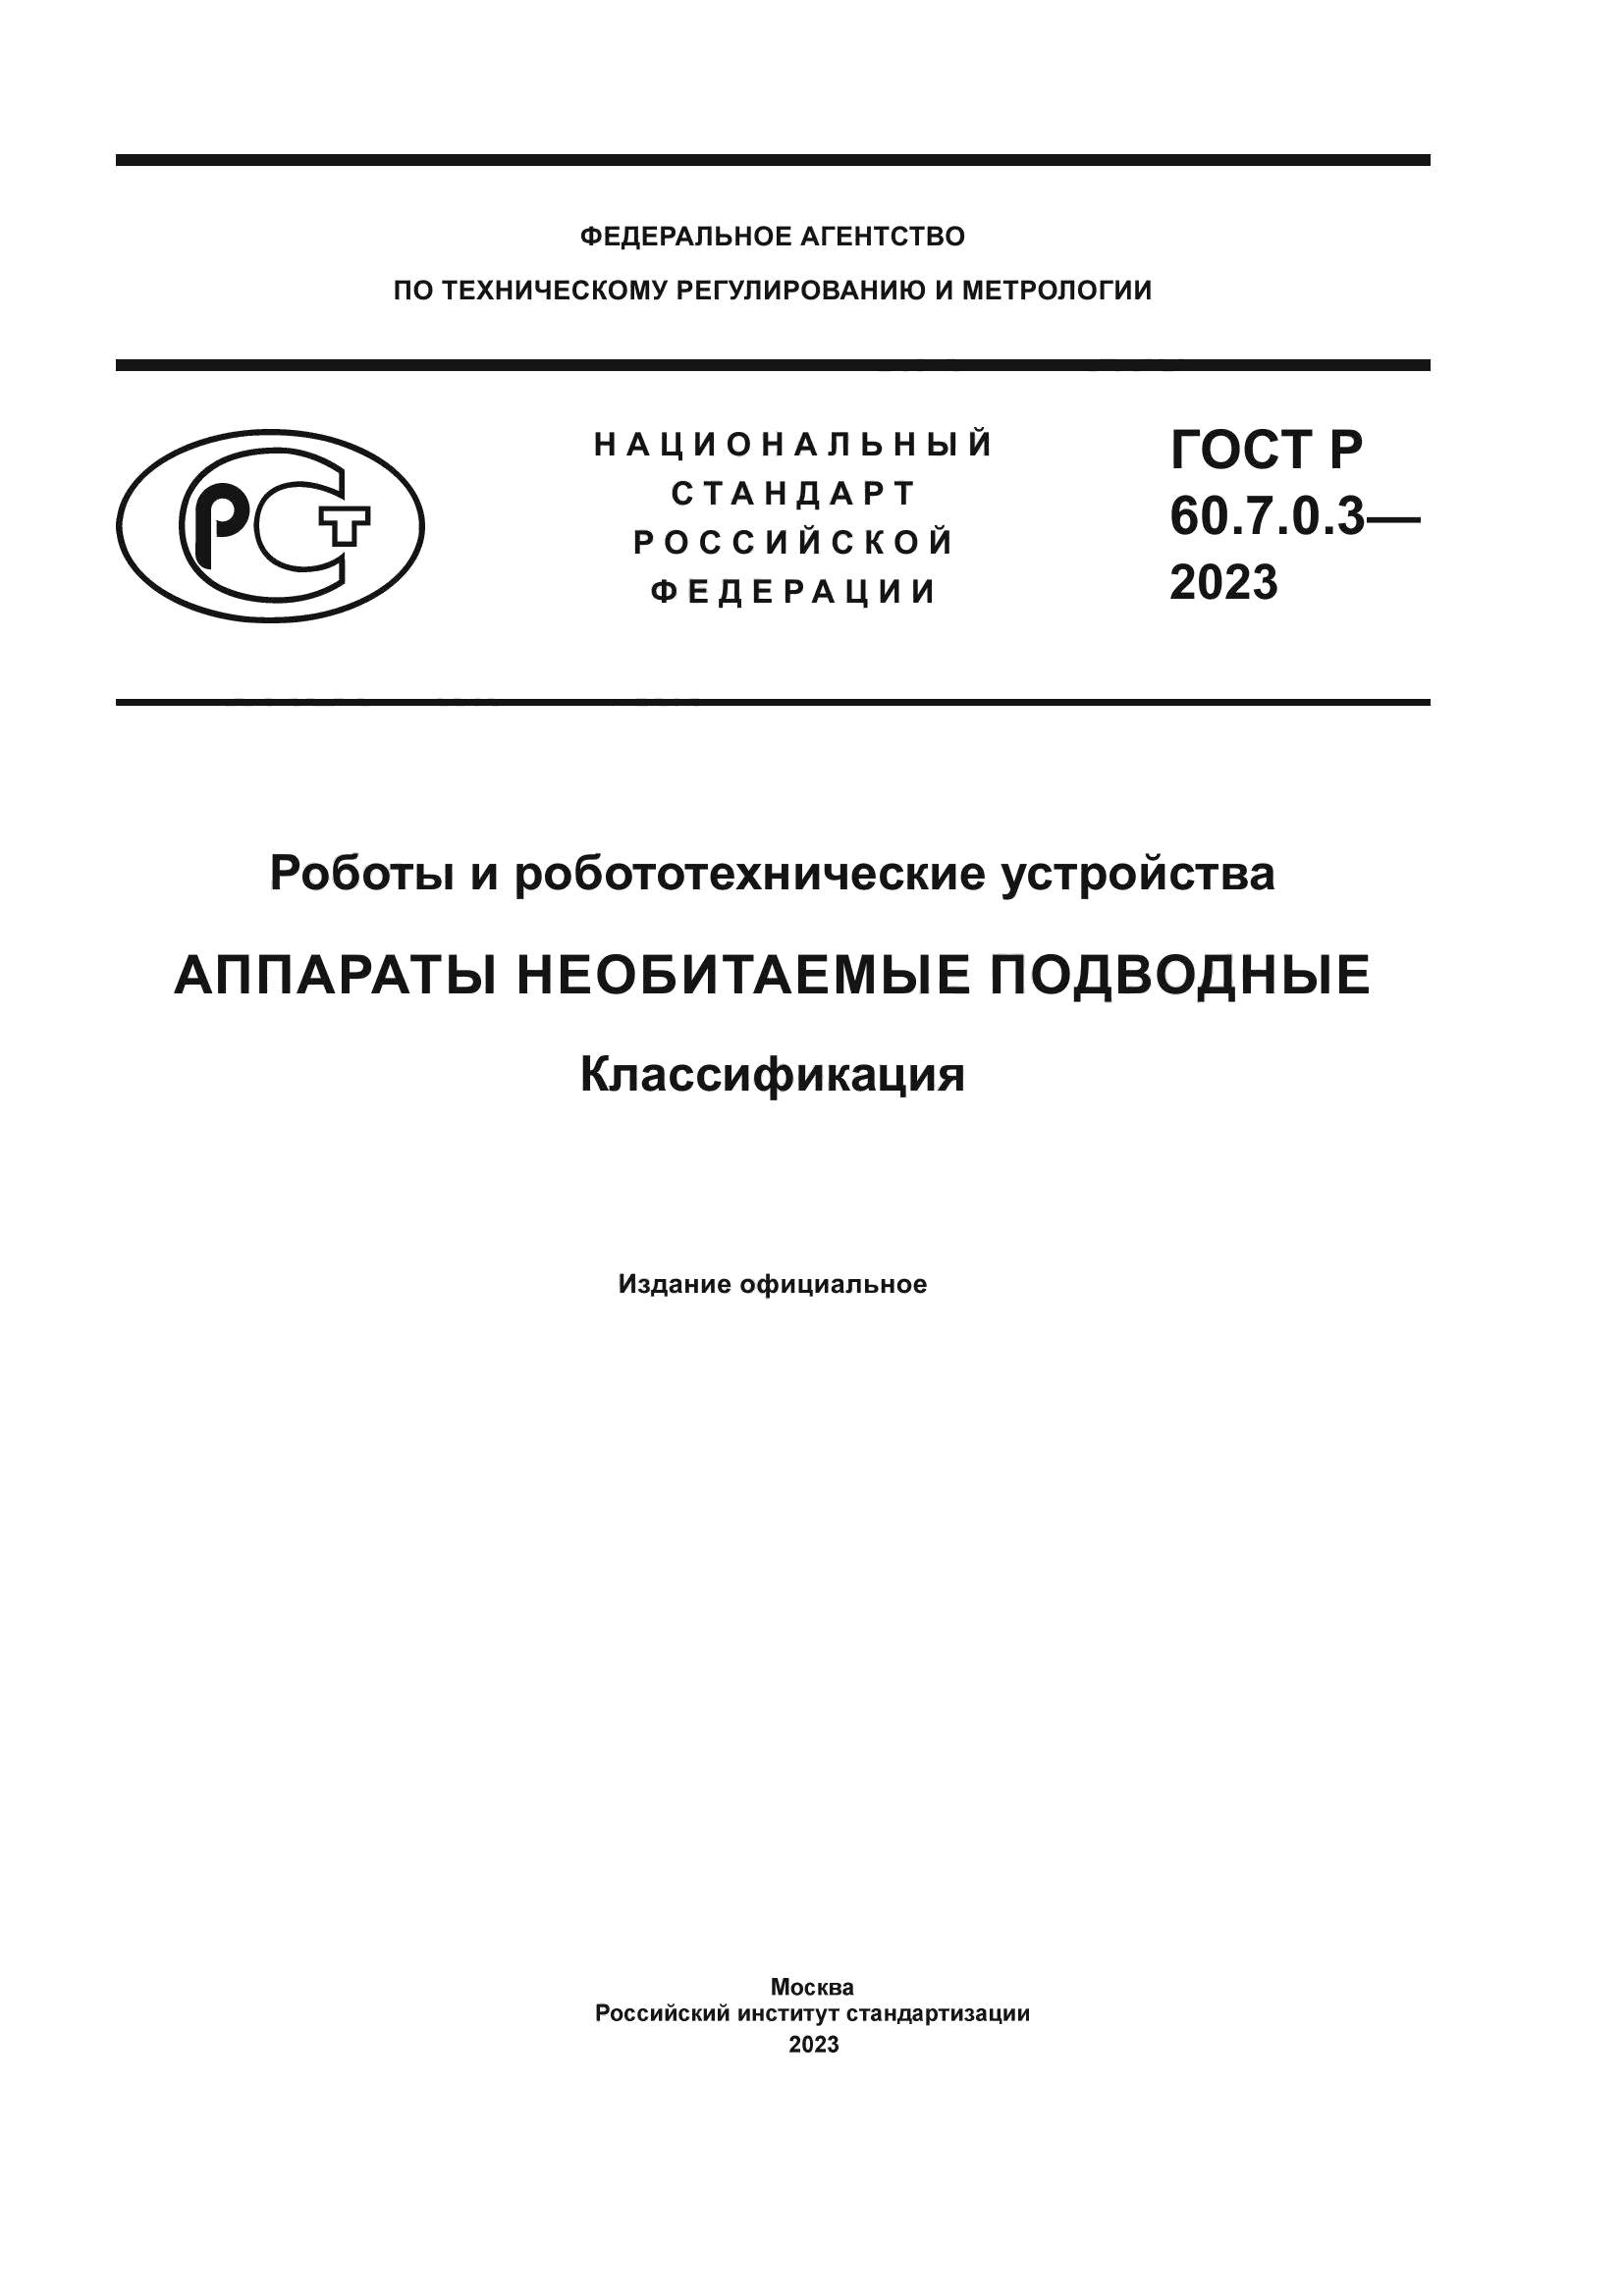 ГОСТ Р 60.7.0.3.-2023